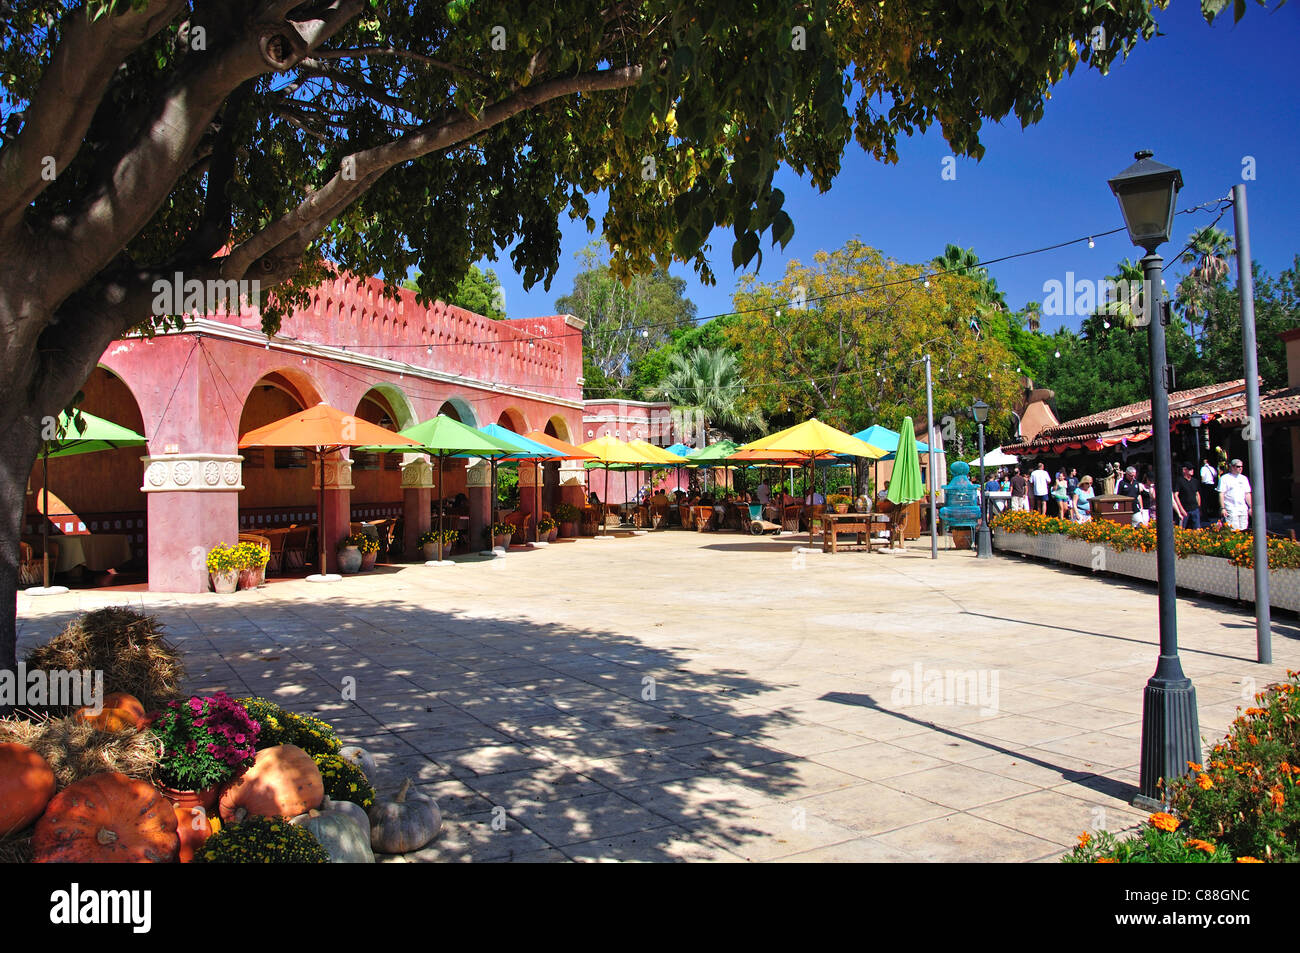 Mexican Restaurant, PortAventura Theme Park, Salou, Costa Daurada, Province of Tarragona, Catalonia, Spain Stock Photo